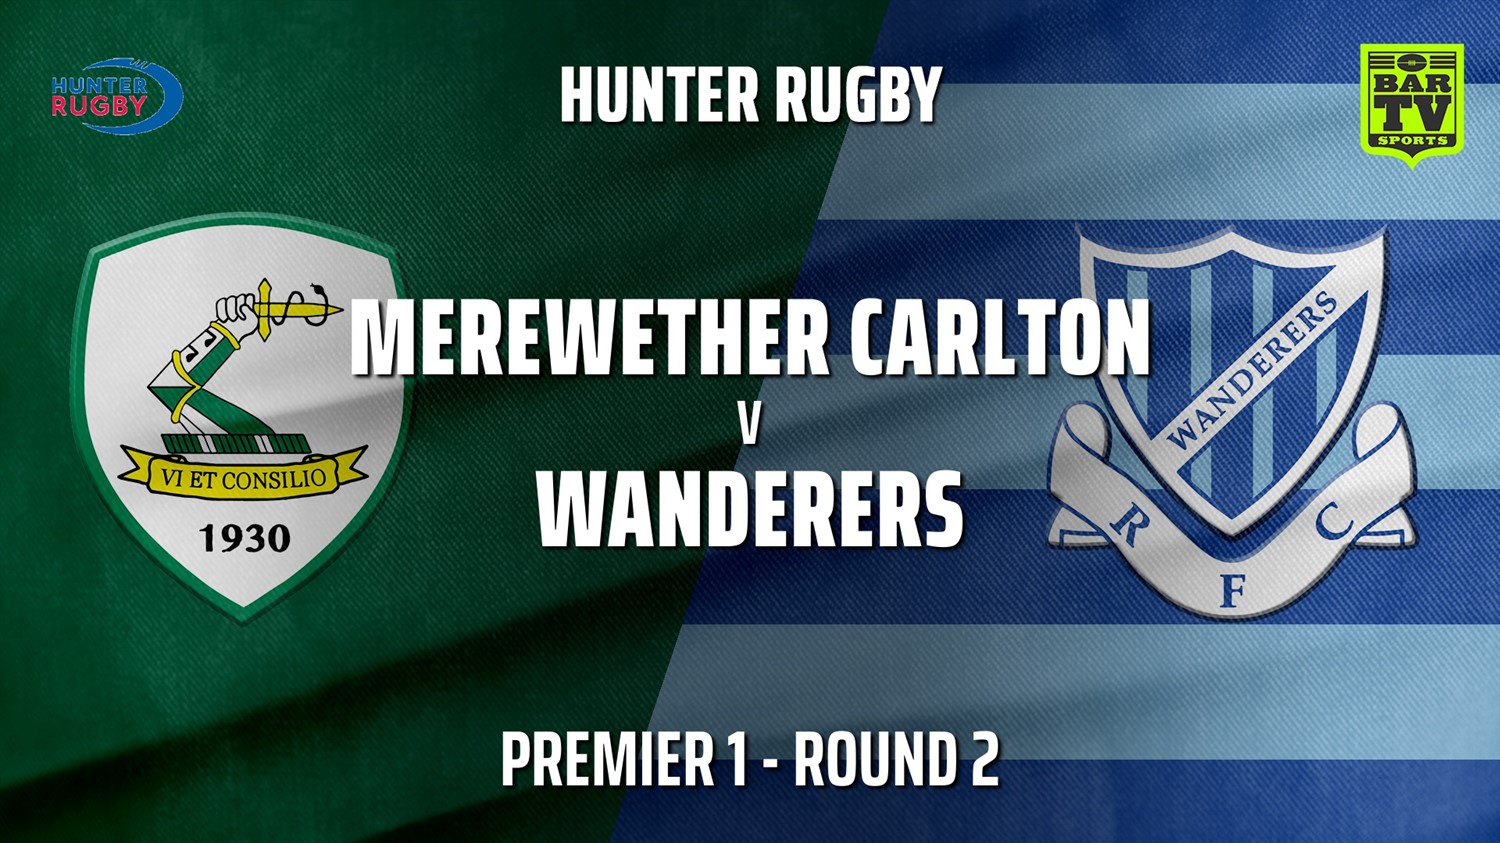 210421-HRU Round 2 - Premier 1 - Merewether Carlton v Wanderers Minigame Slate Image